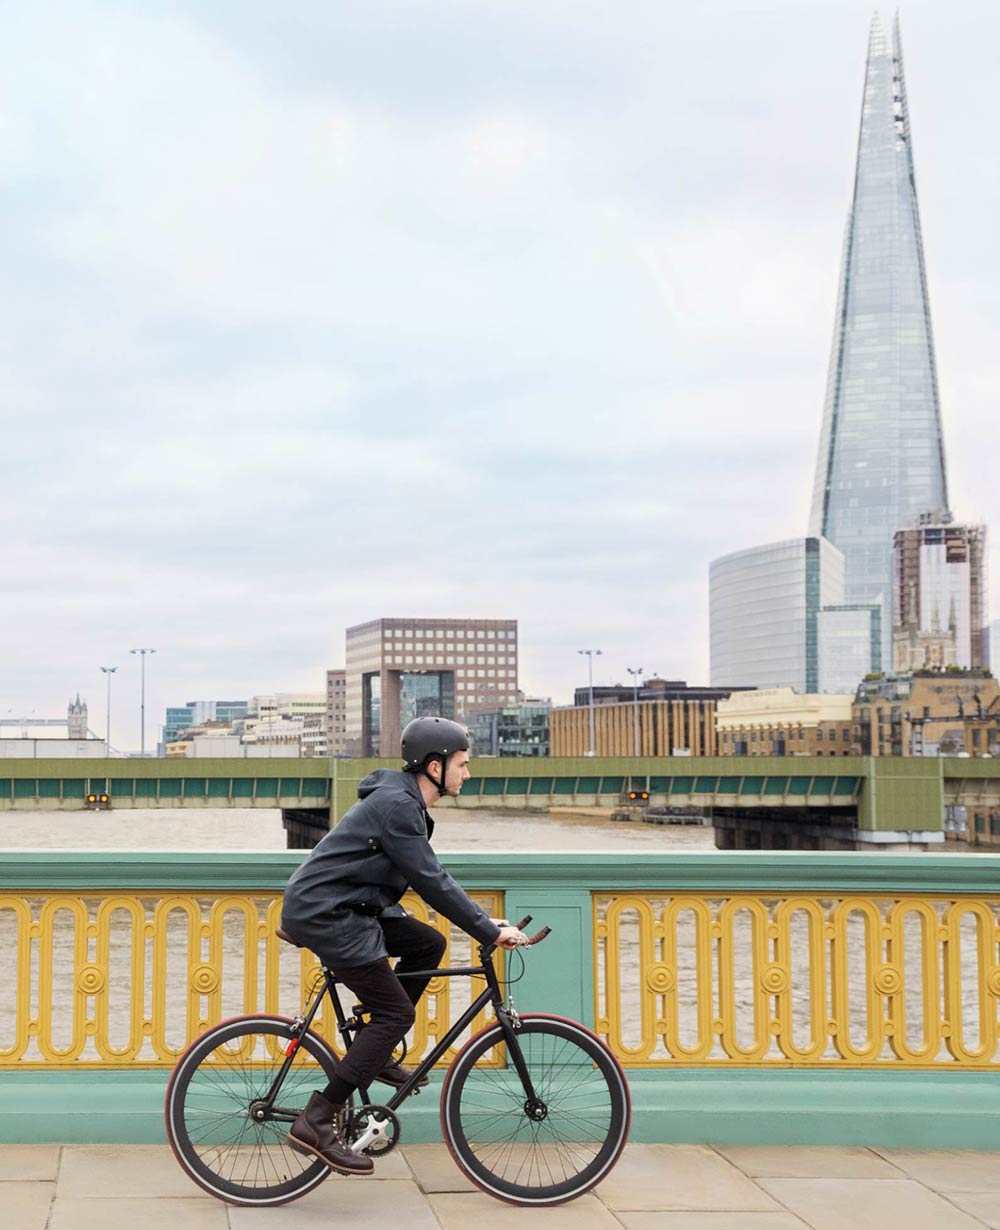 Brigade Court SE1 - man riding bike in London